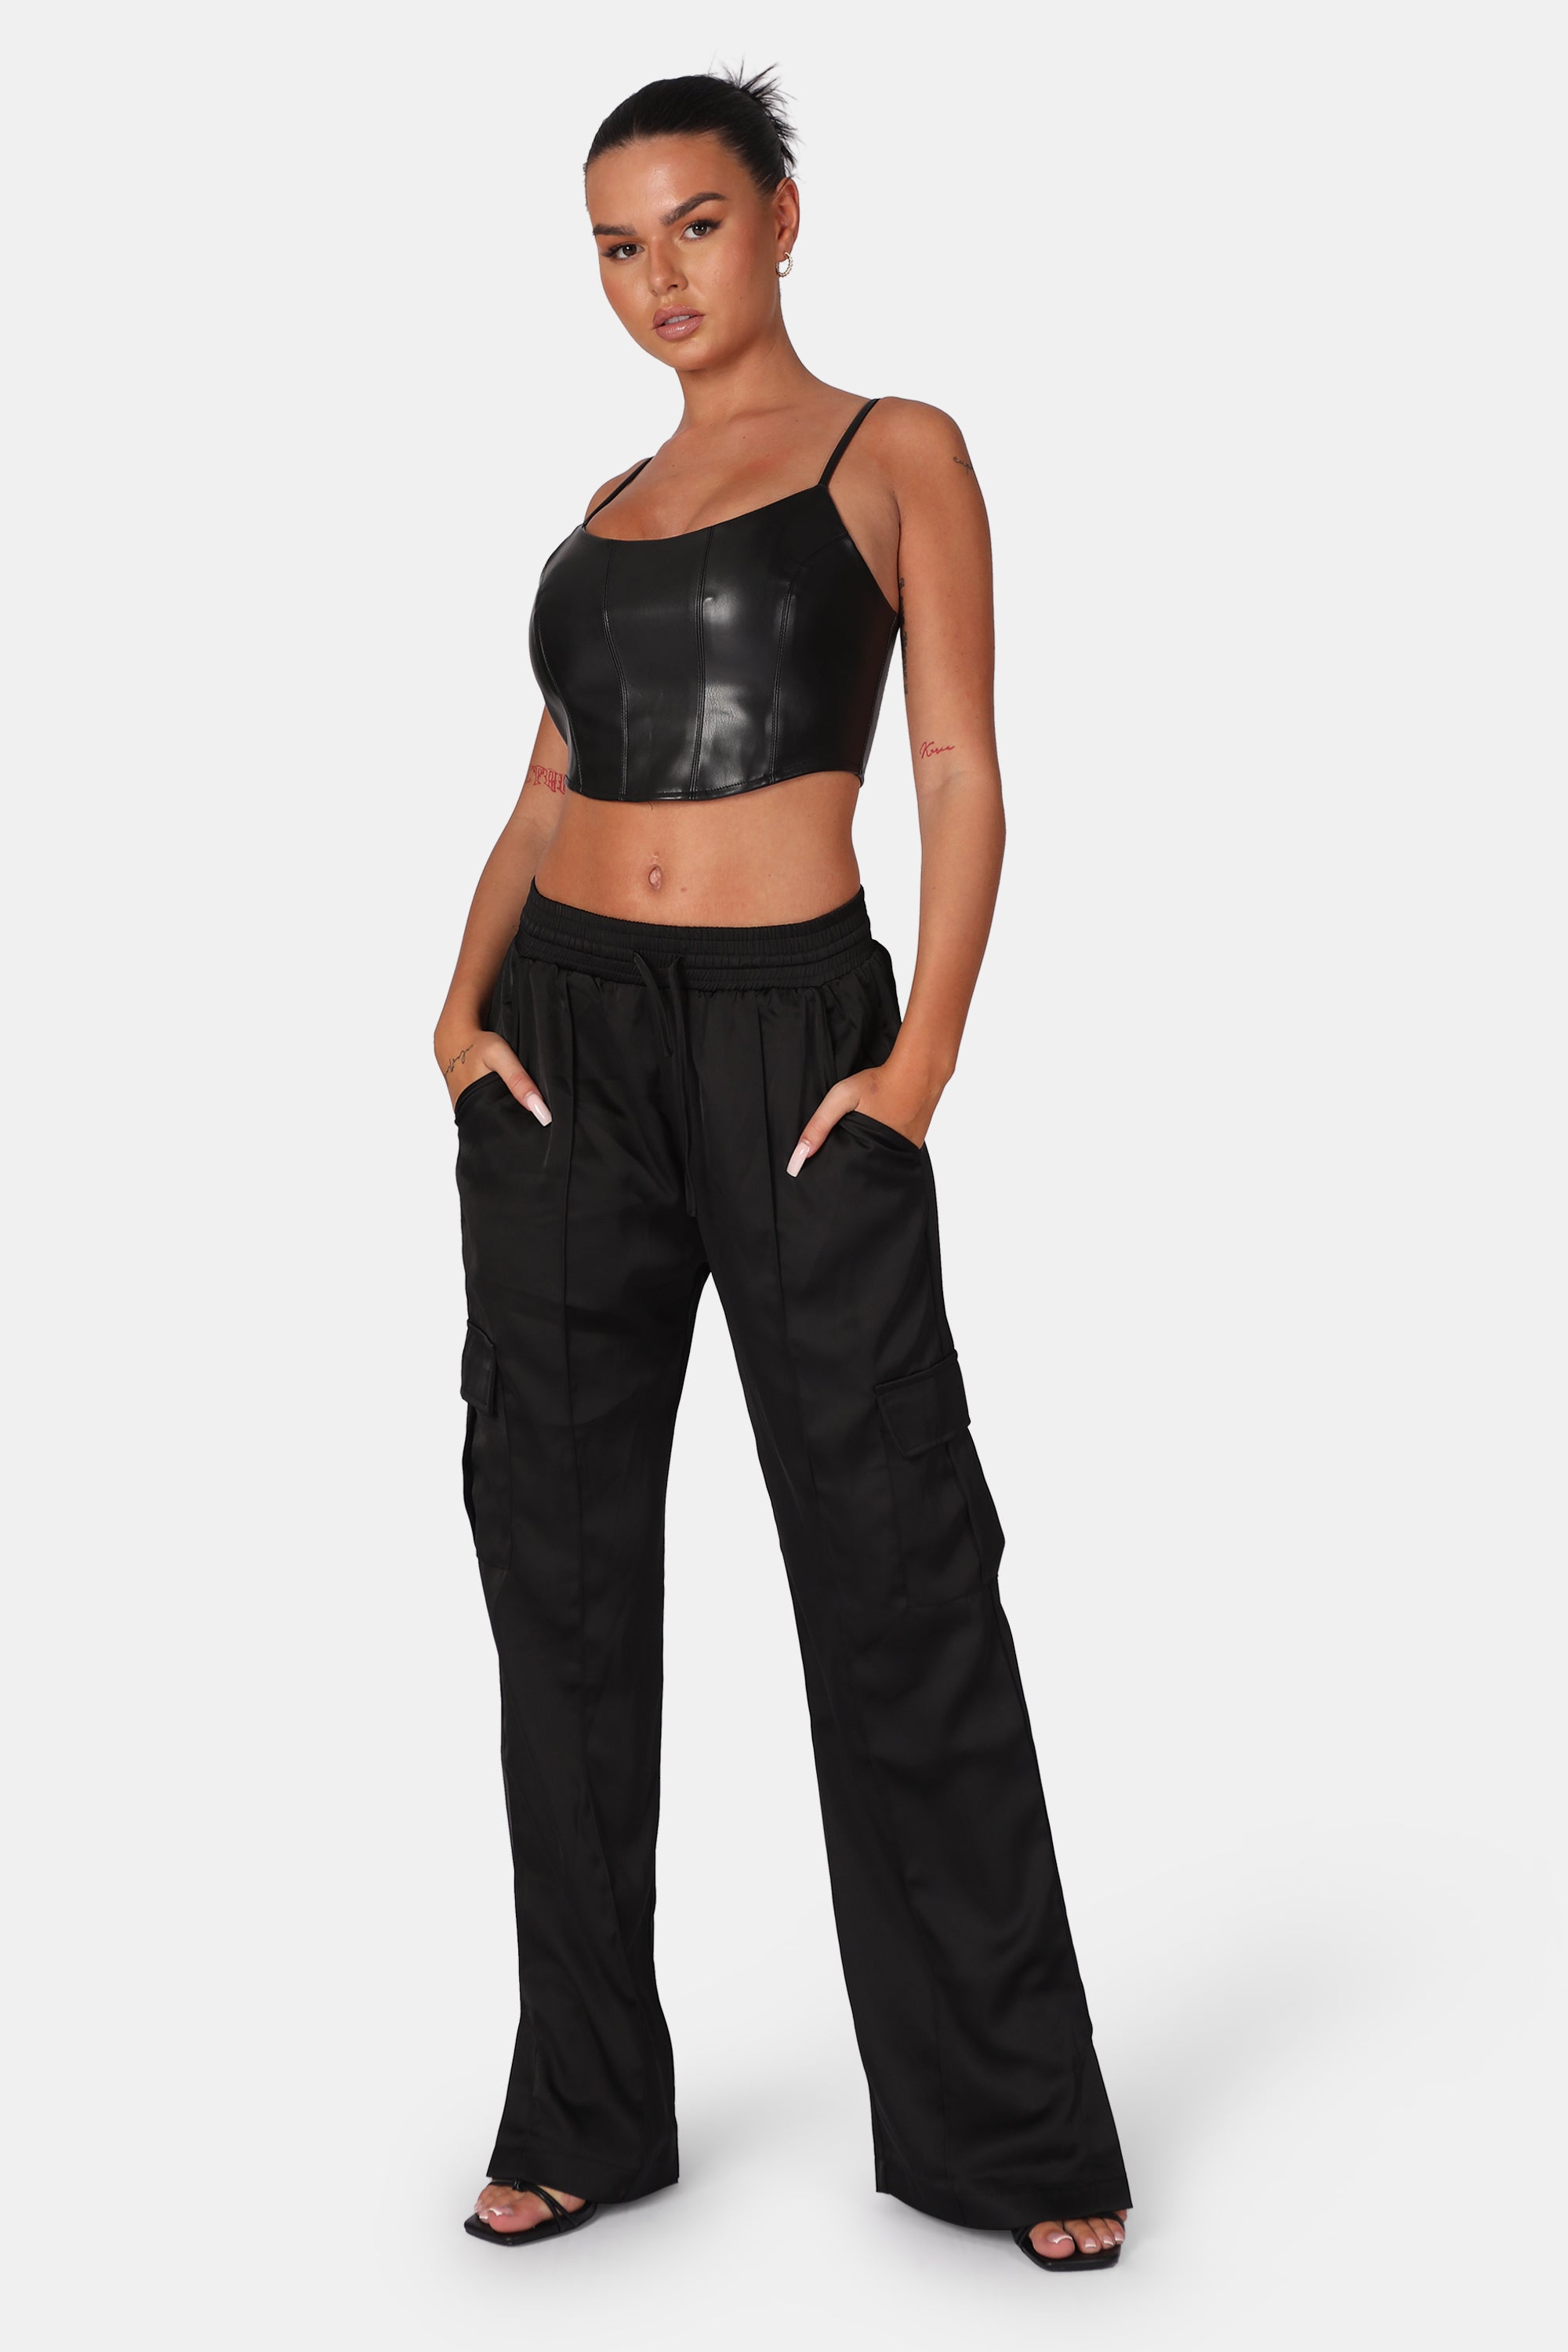 Guess Women's Zoena Satin Cargo Pants Trousers Black Pockets Size 2 New  Joggers | eBay